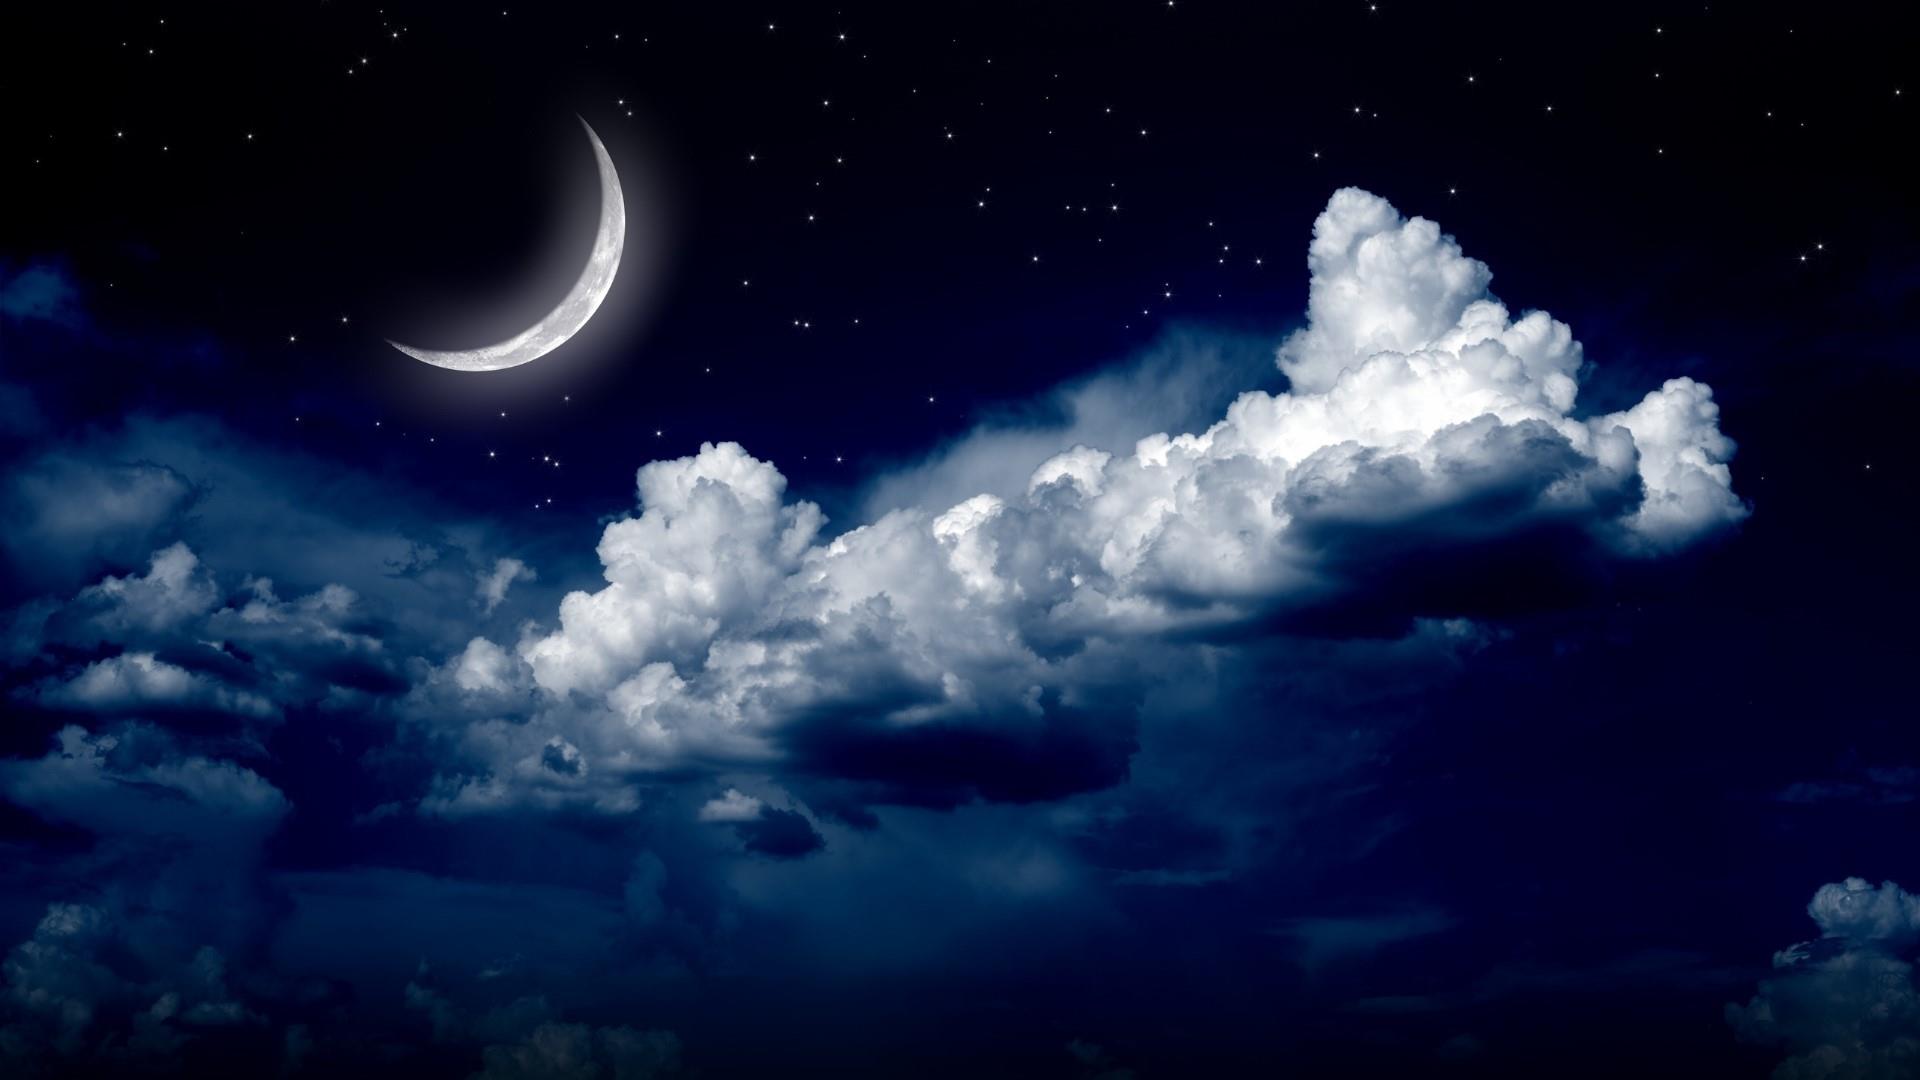 Starry Night Sky With The Moon Wallpaper. Wallpaper Studio 10